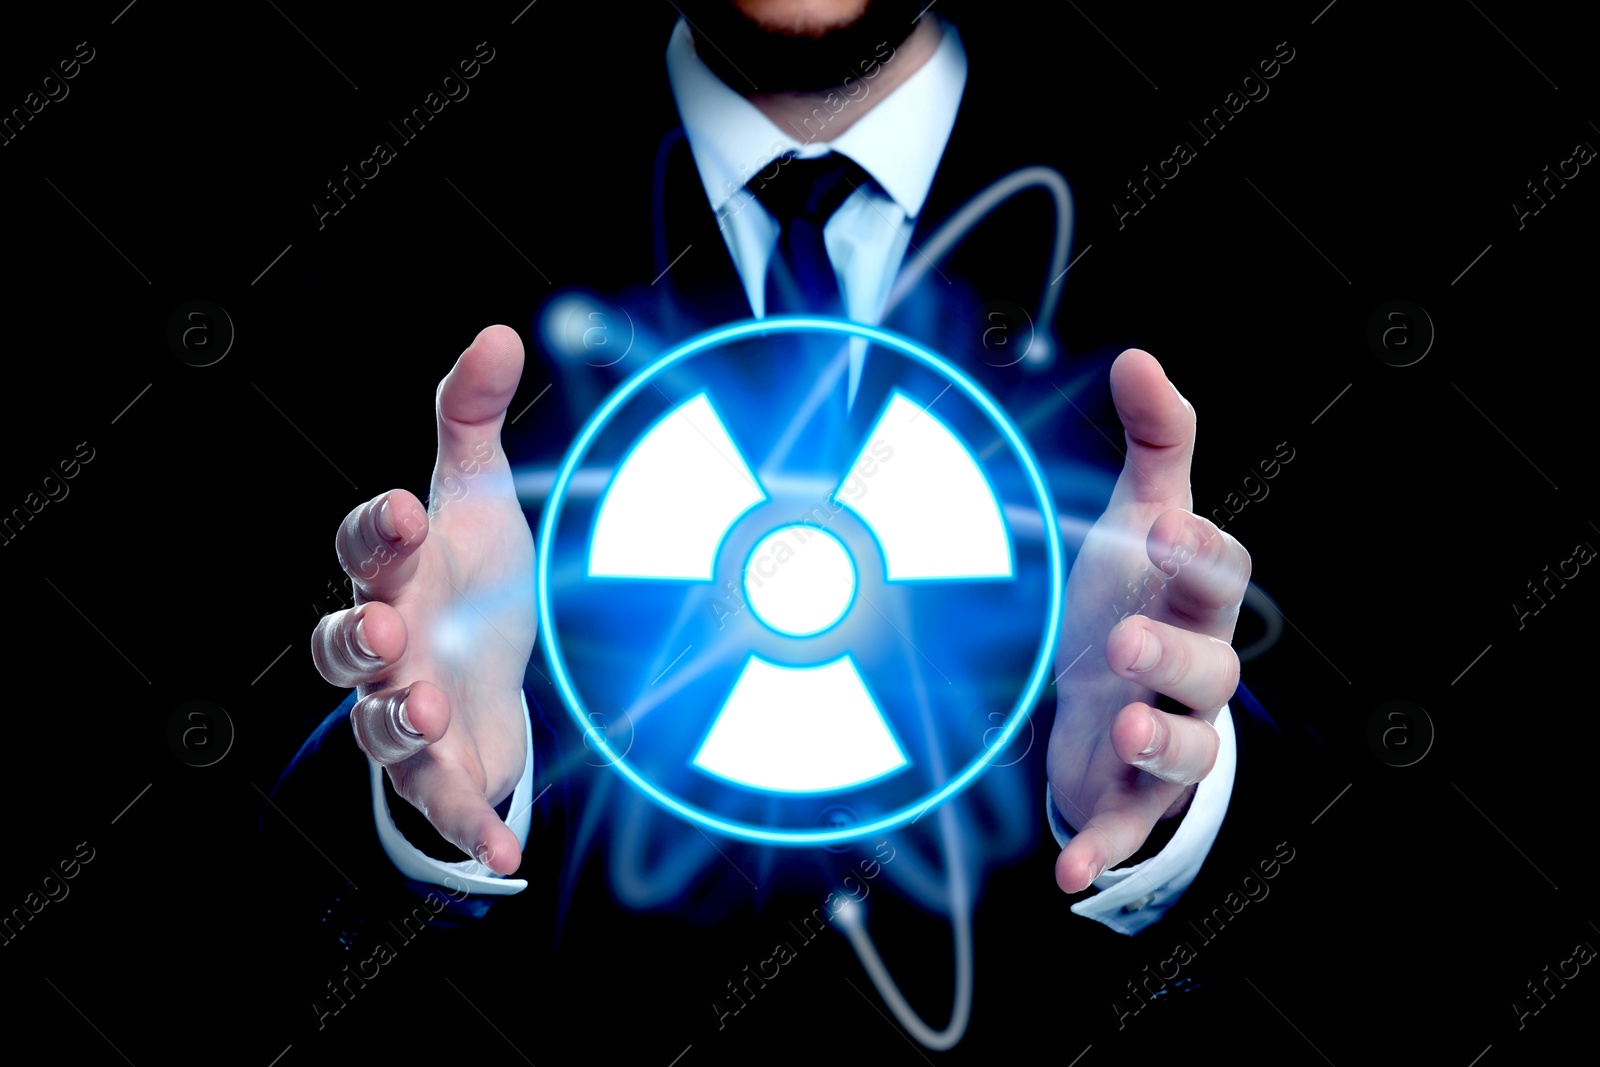 Image of Man holding glowing atom symbol with radiation warning sign on black background, closeup